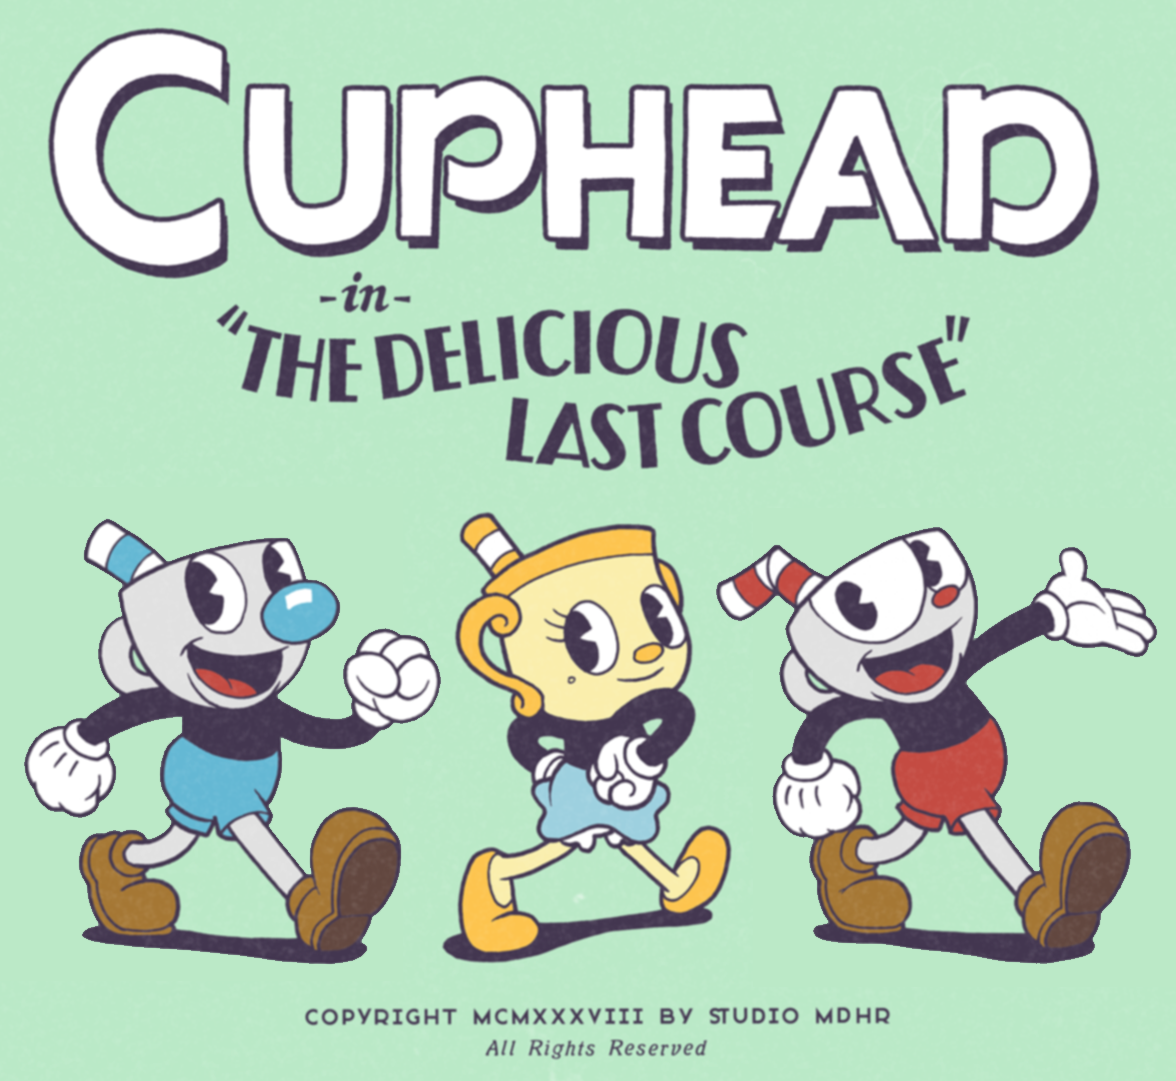 Cuphead : The Delicious Last Course